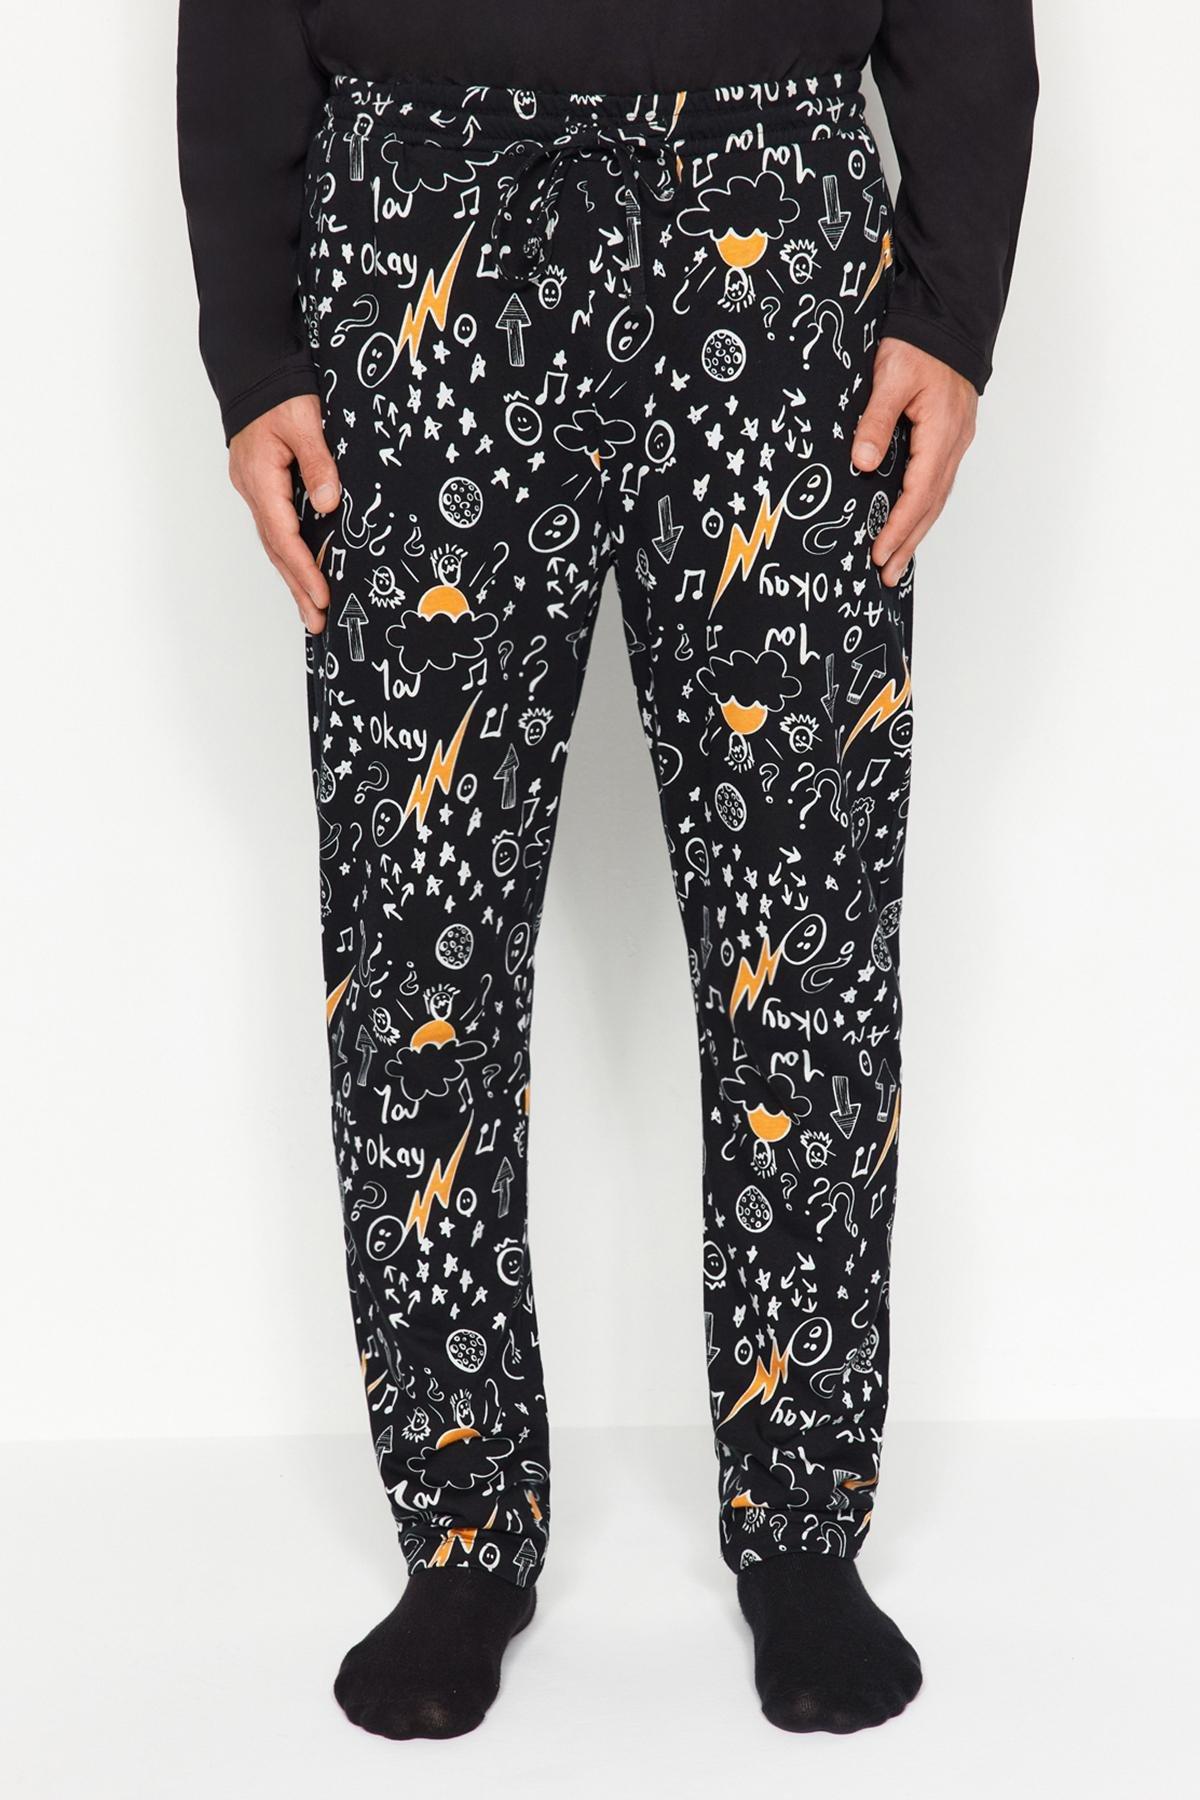 Trendyol - Black Embroidered Knitted Pyjamas Set